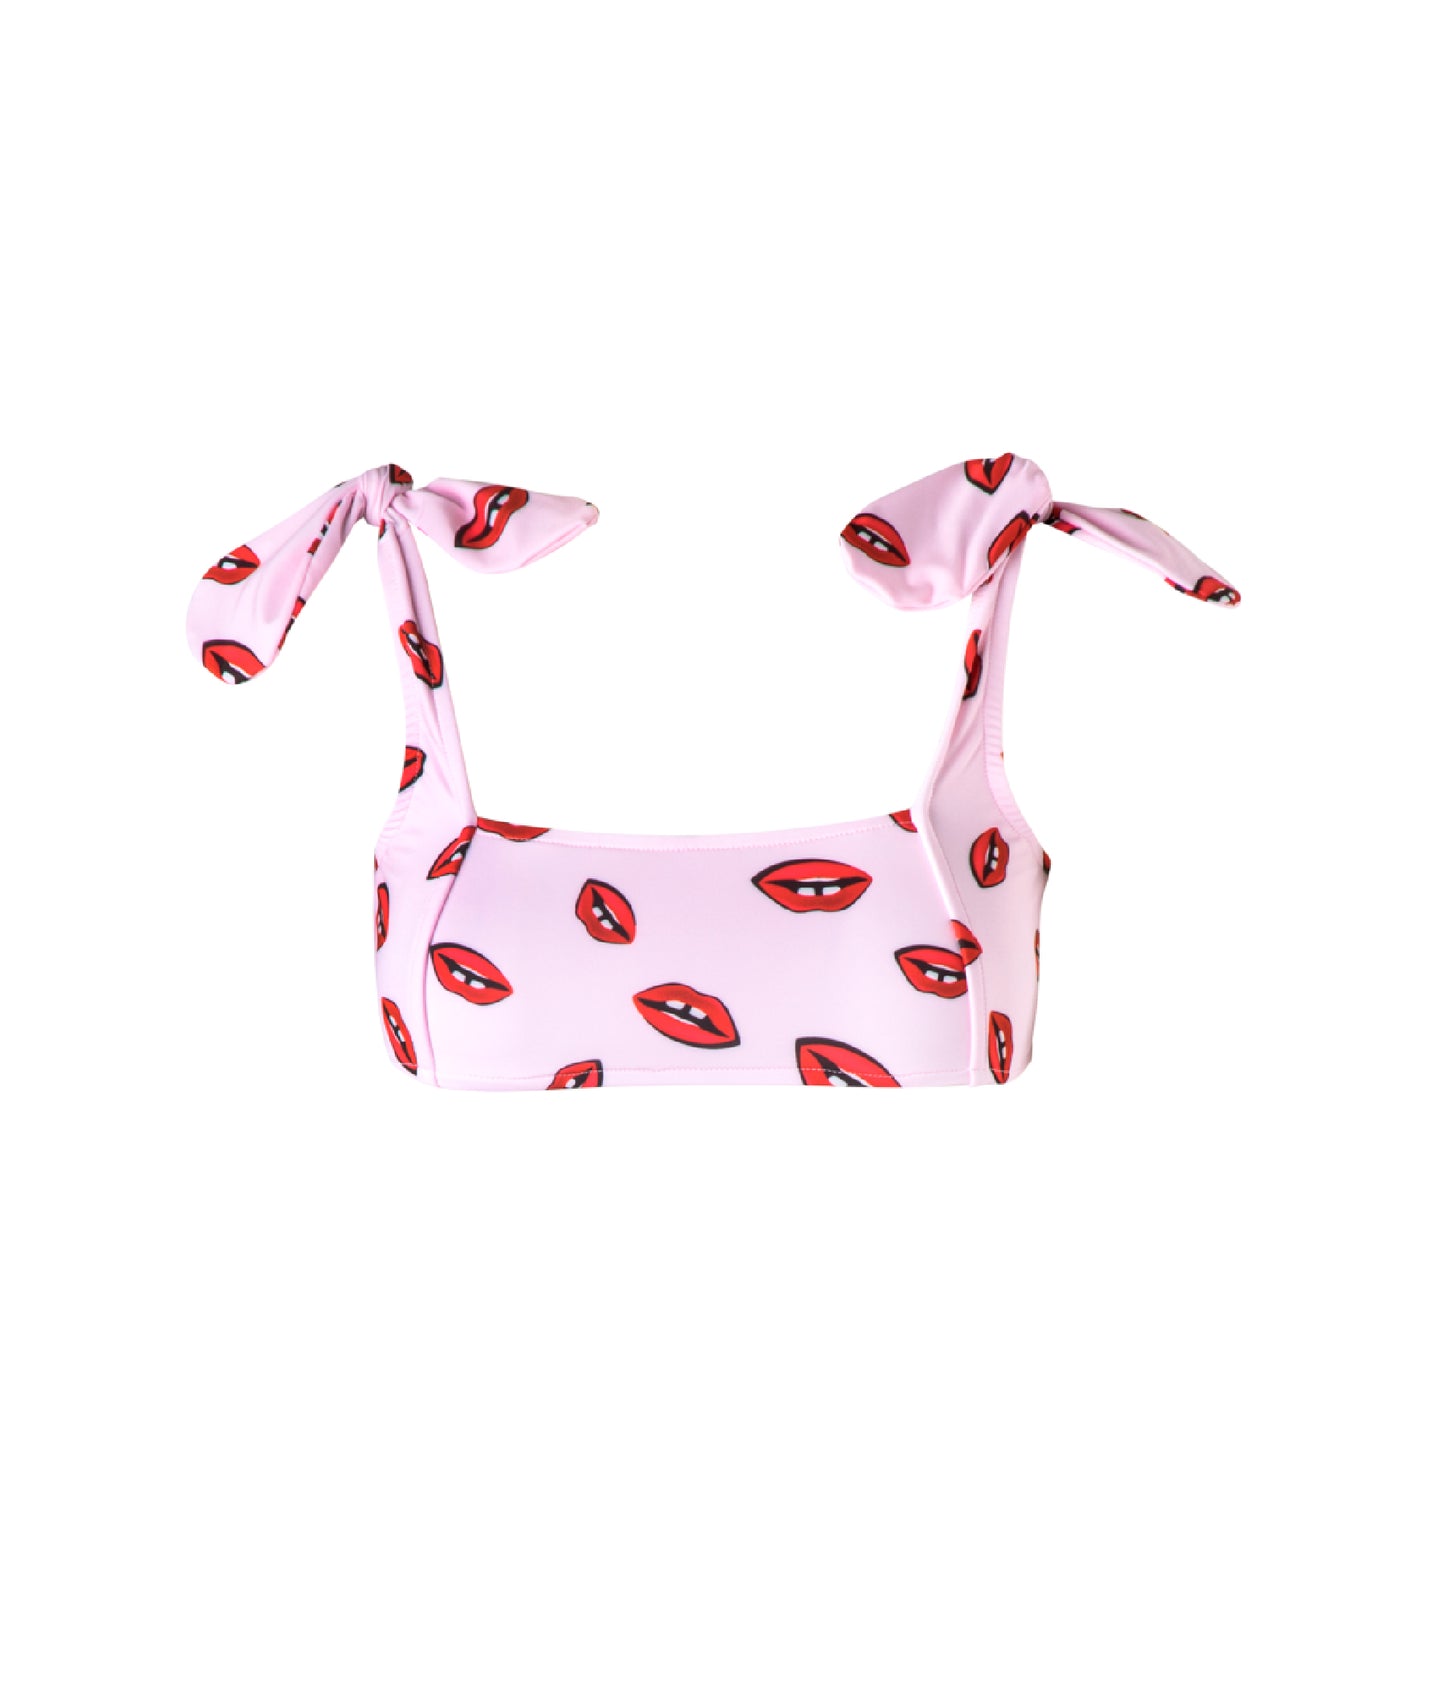 Verdelimon - Bikini Top - Morioka - Printed - Pink Lips - Front